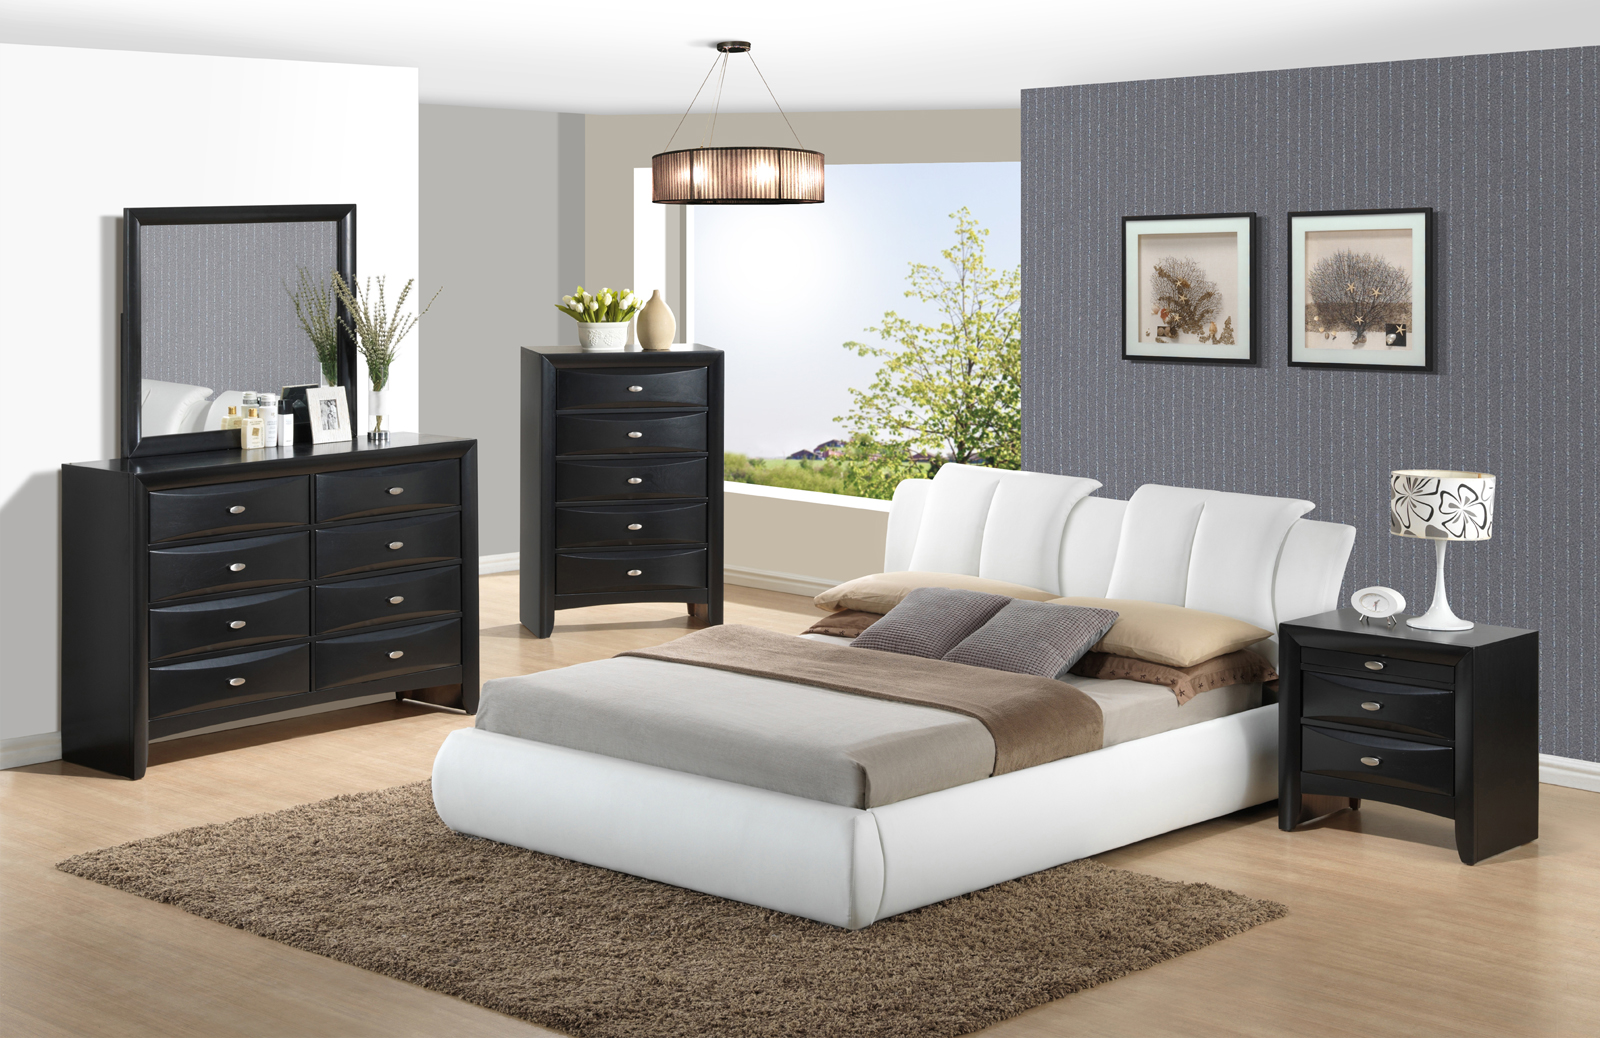 global inspired bedroom furniture